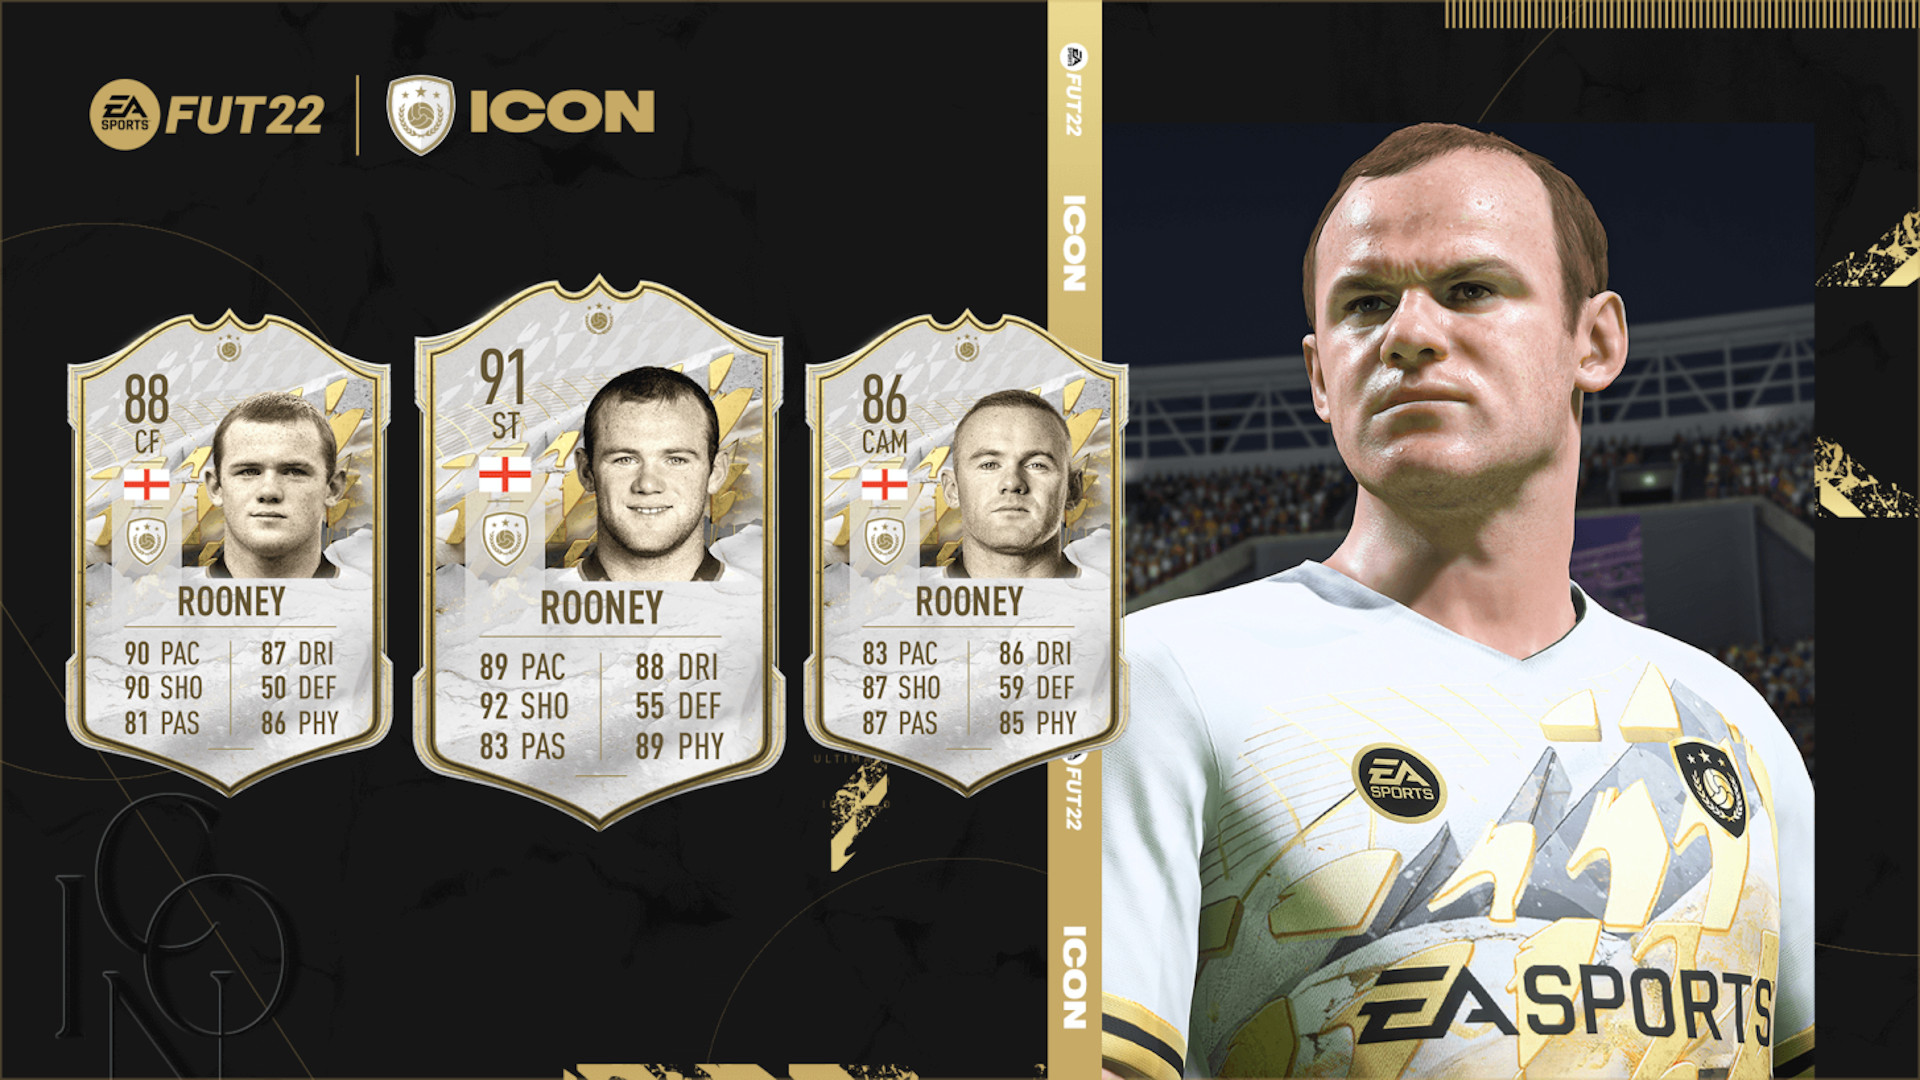 FIFA 22 new Icons: Wayne Rooney as a FIFA 22 icon.